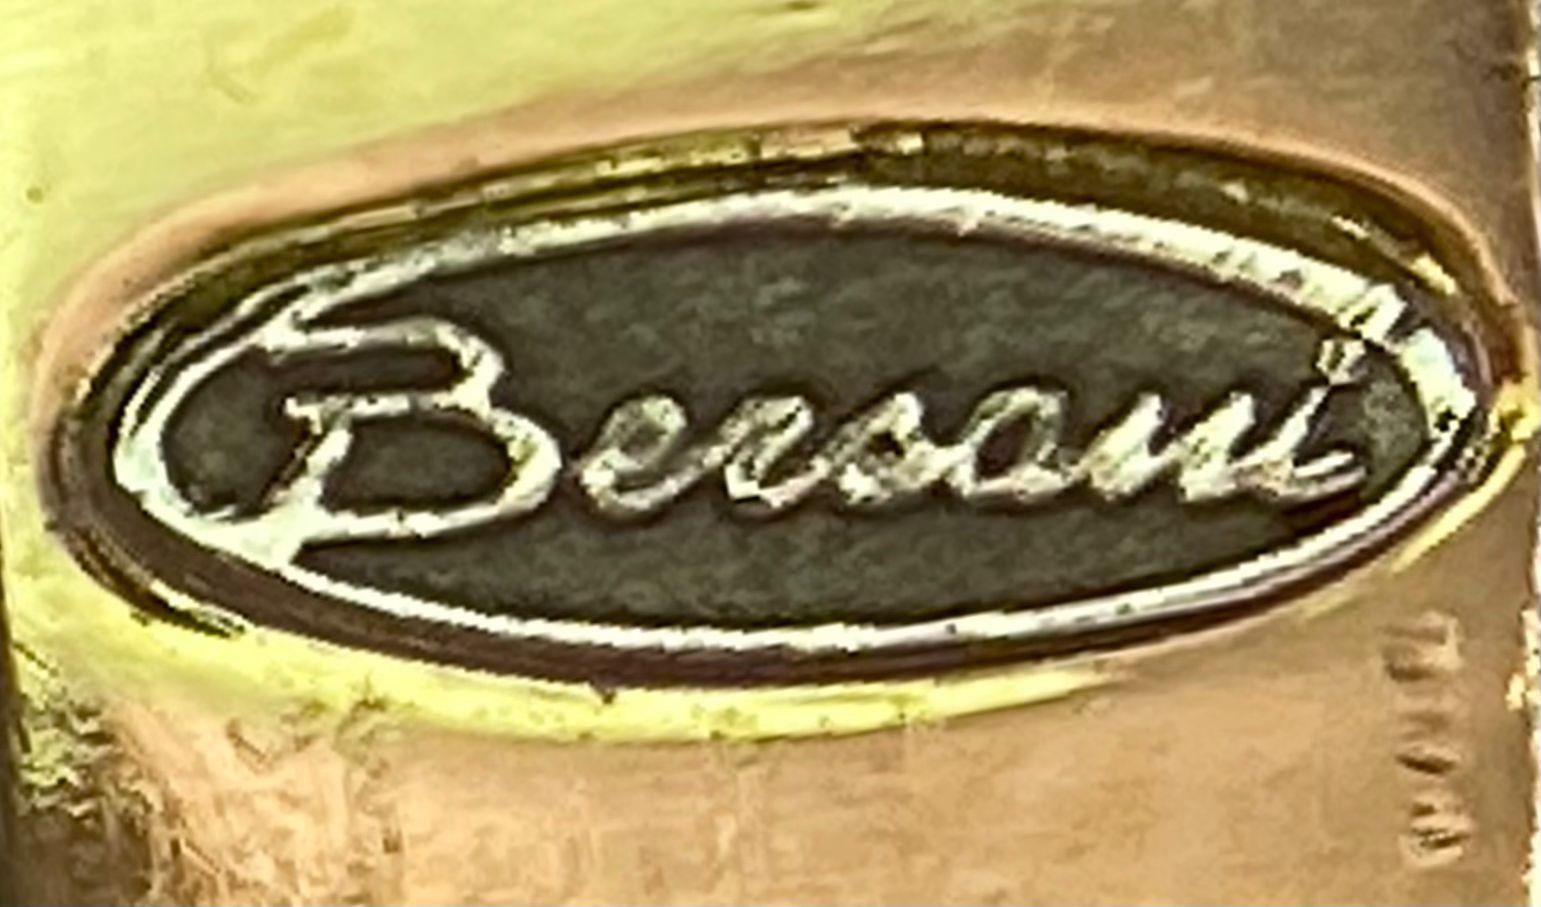 A Bersani Designer Black Silicone and 18K Yellow Gold Stylish Comfort Bracelet. - Image 5 of 6